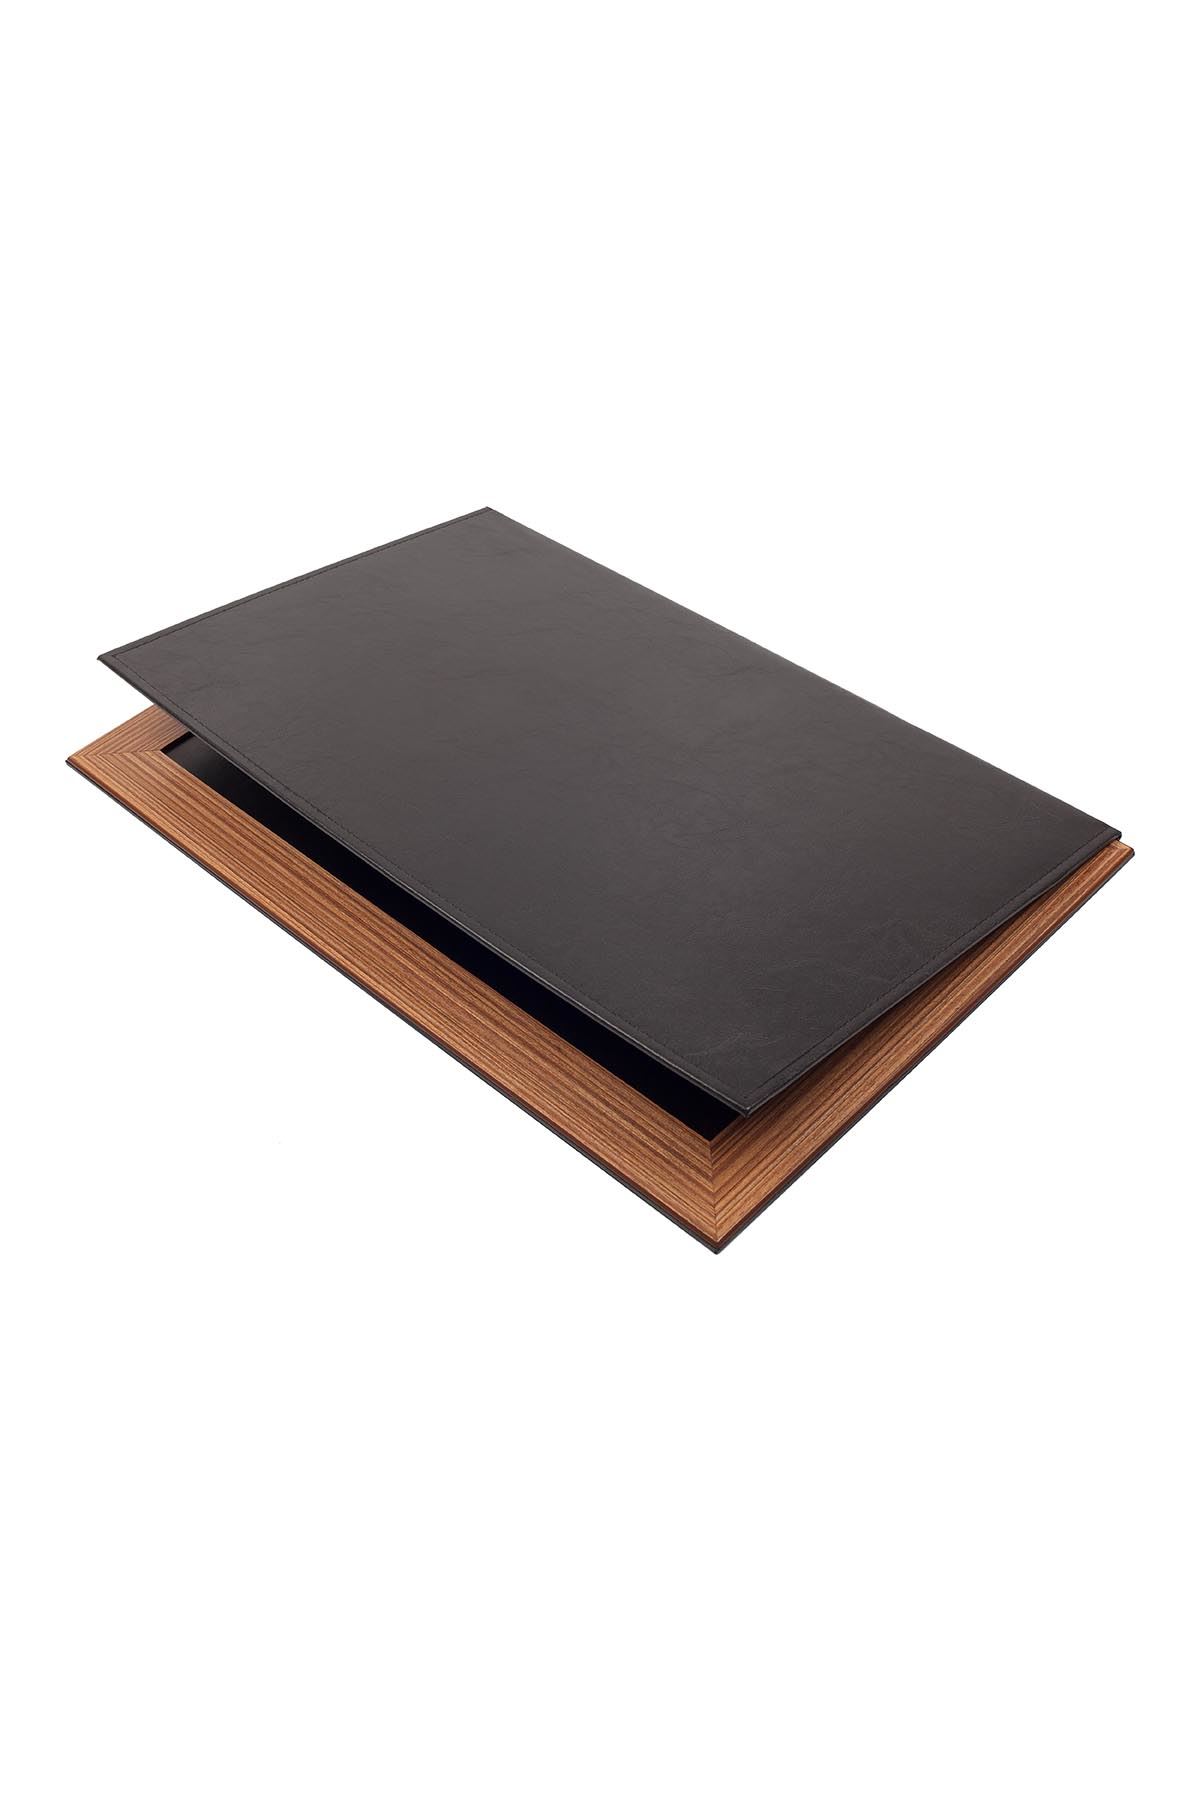 Star Lux Leather Desk Set Black 10 Accessories